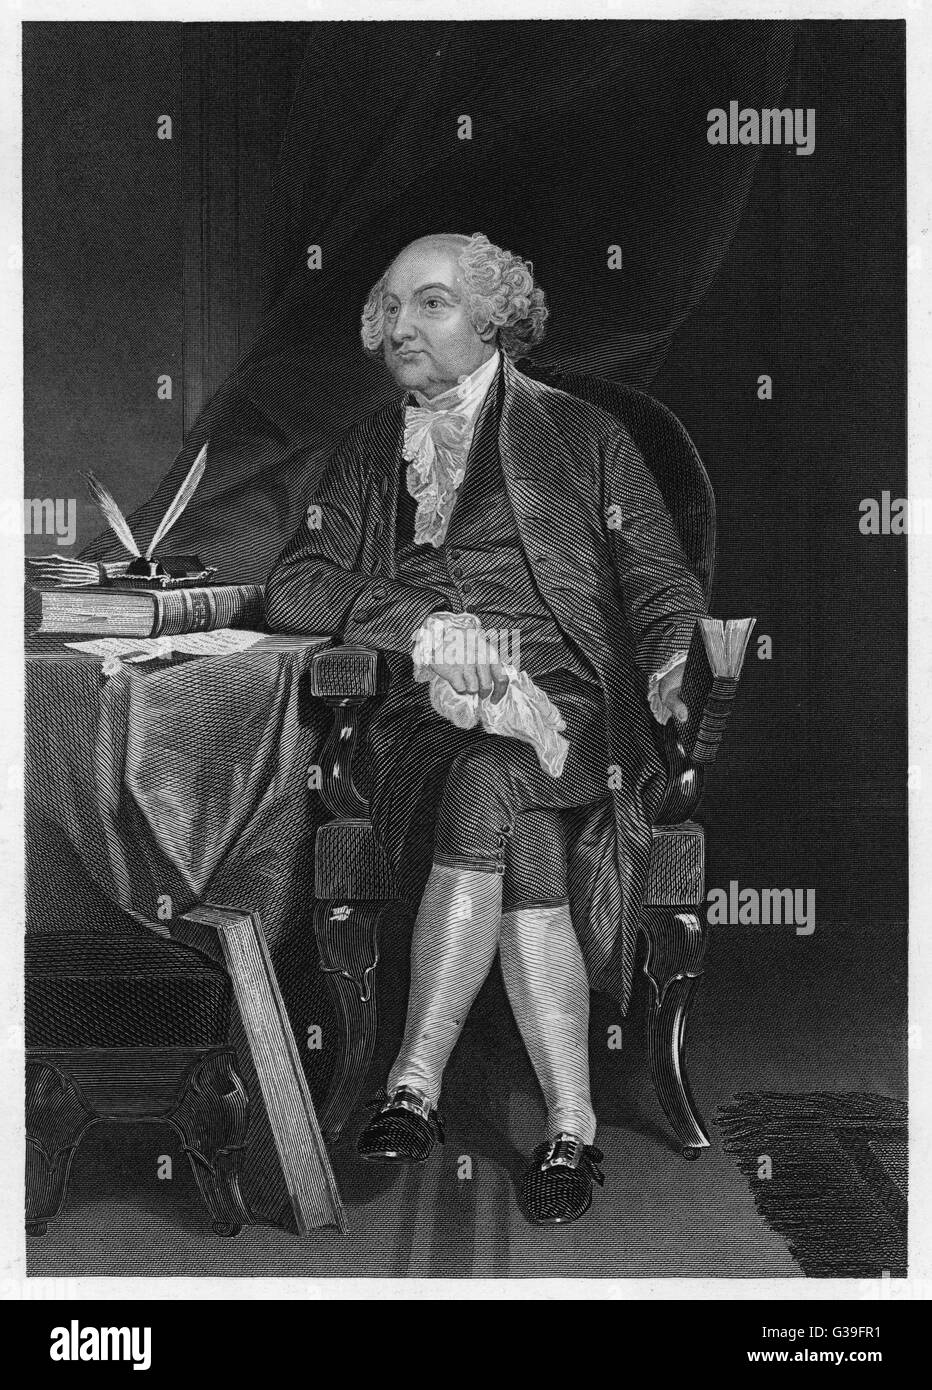 JOHN ADAMS  American statesman, second President of the United States      Date: 1735 - 1826 Stock Photo